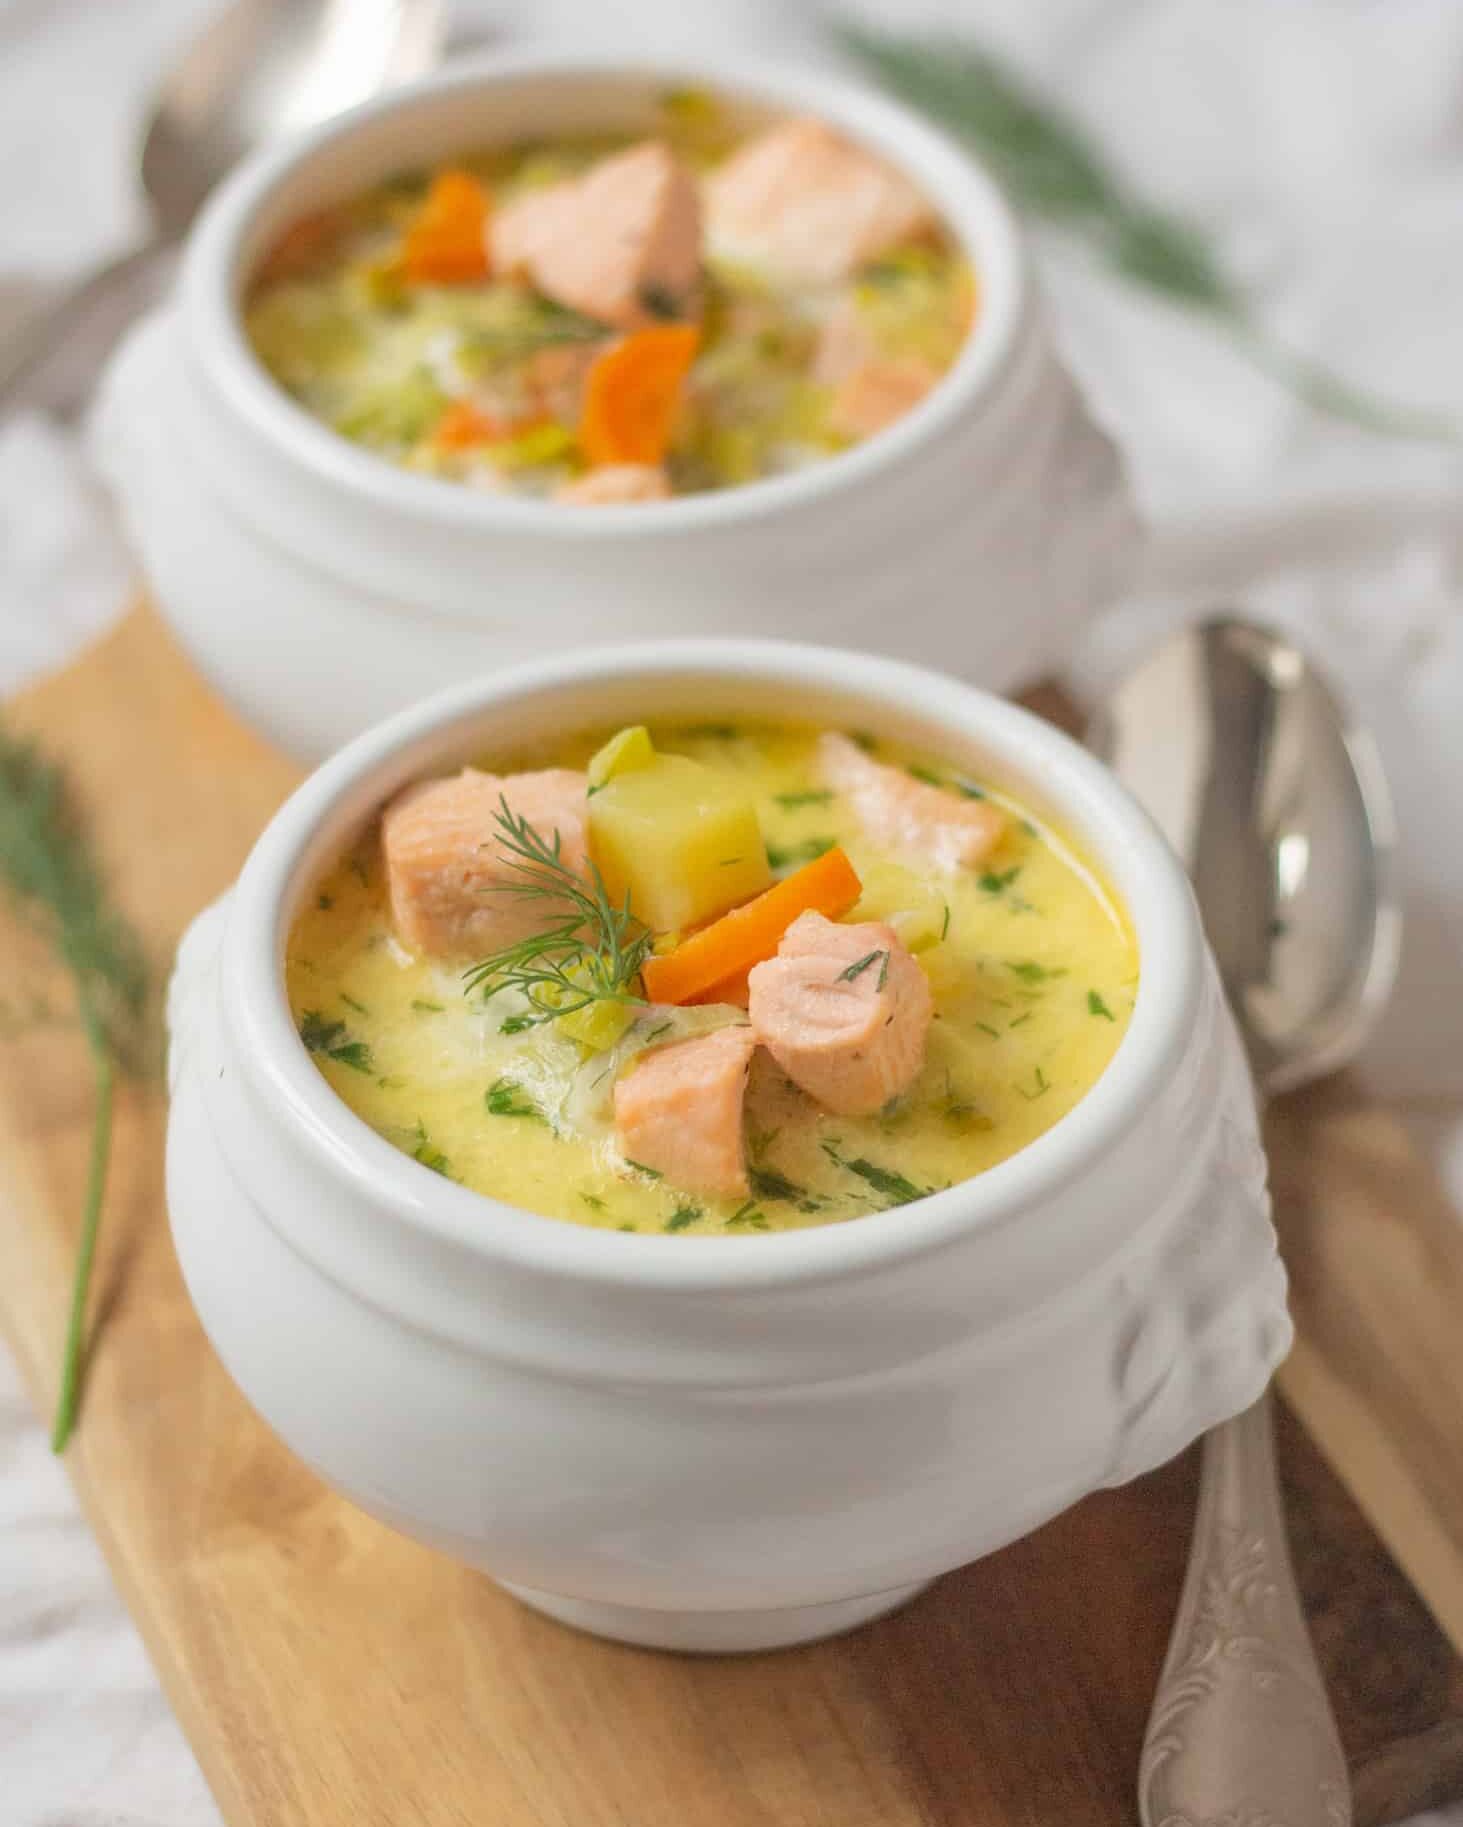 Крем-суп с семгой и сливками